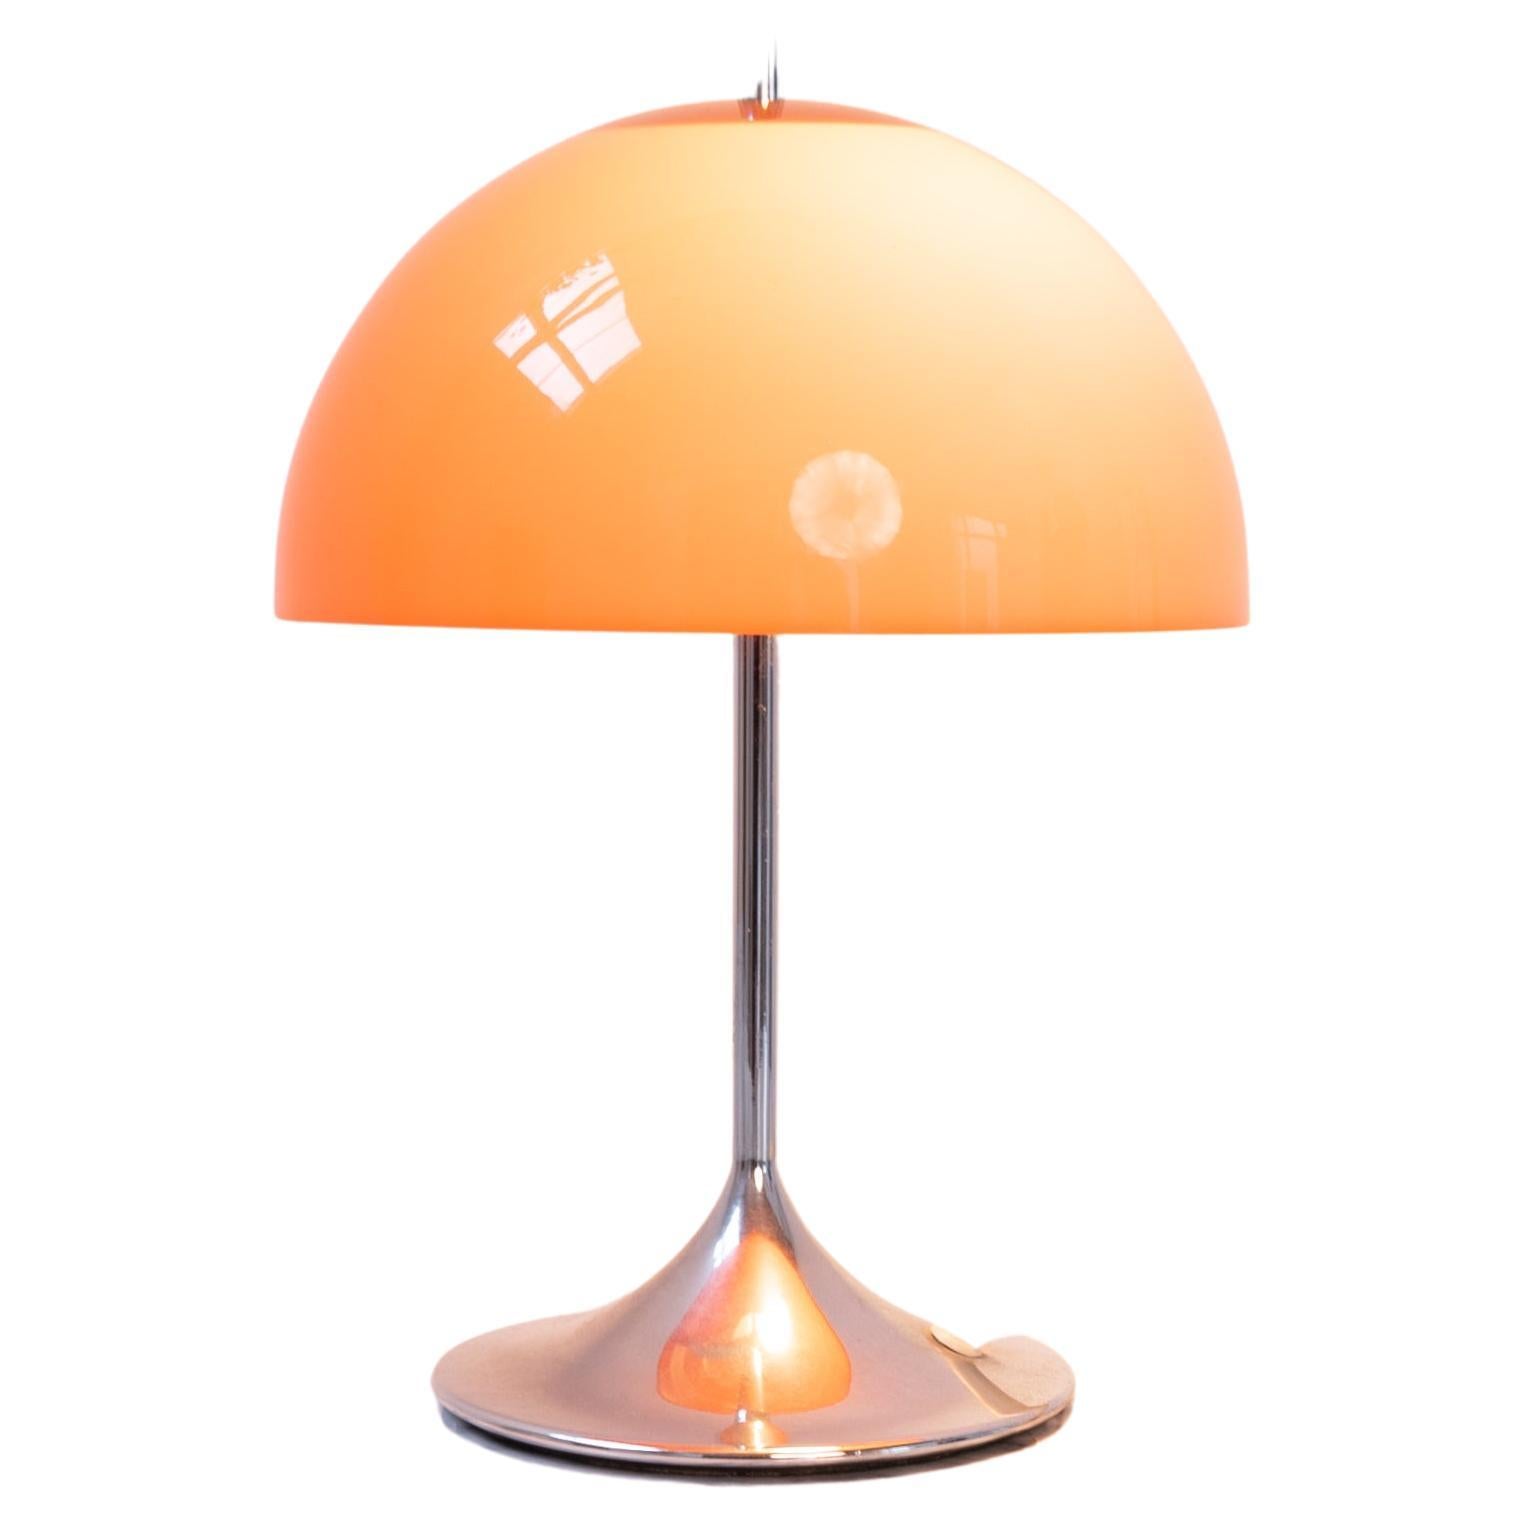 German Space Age Vintage Orange Table Lamp by Frank Bentler for WILA '1970s'